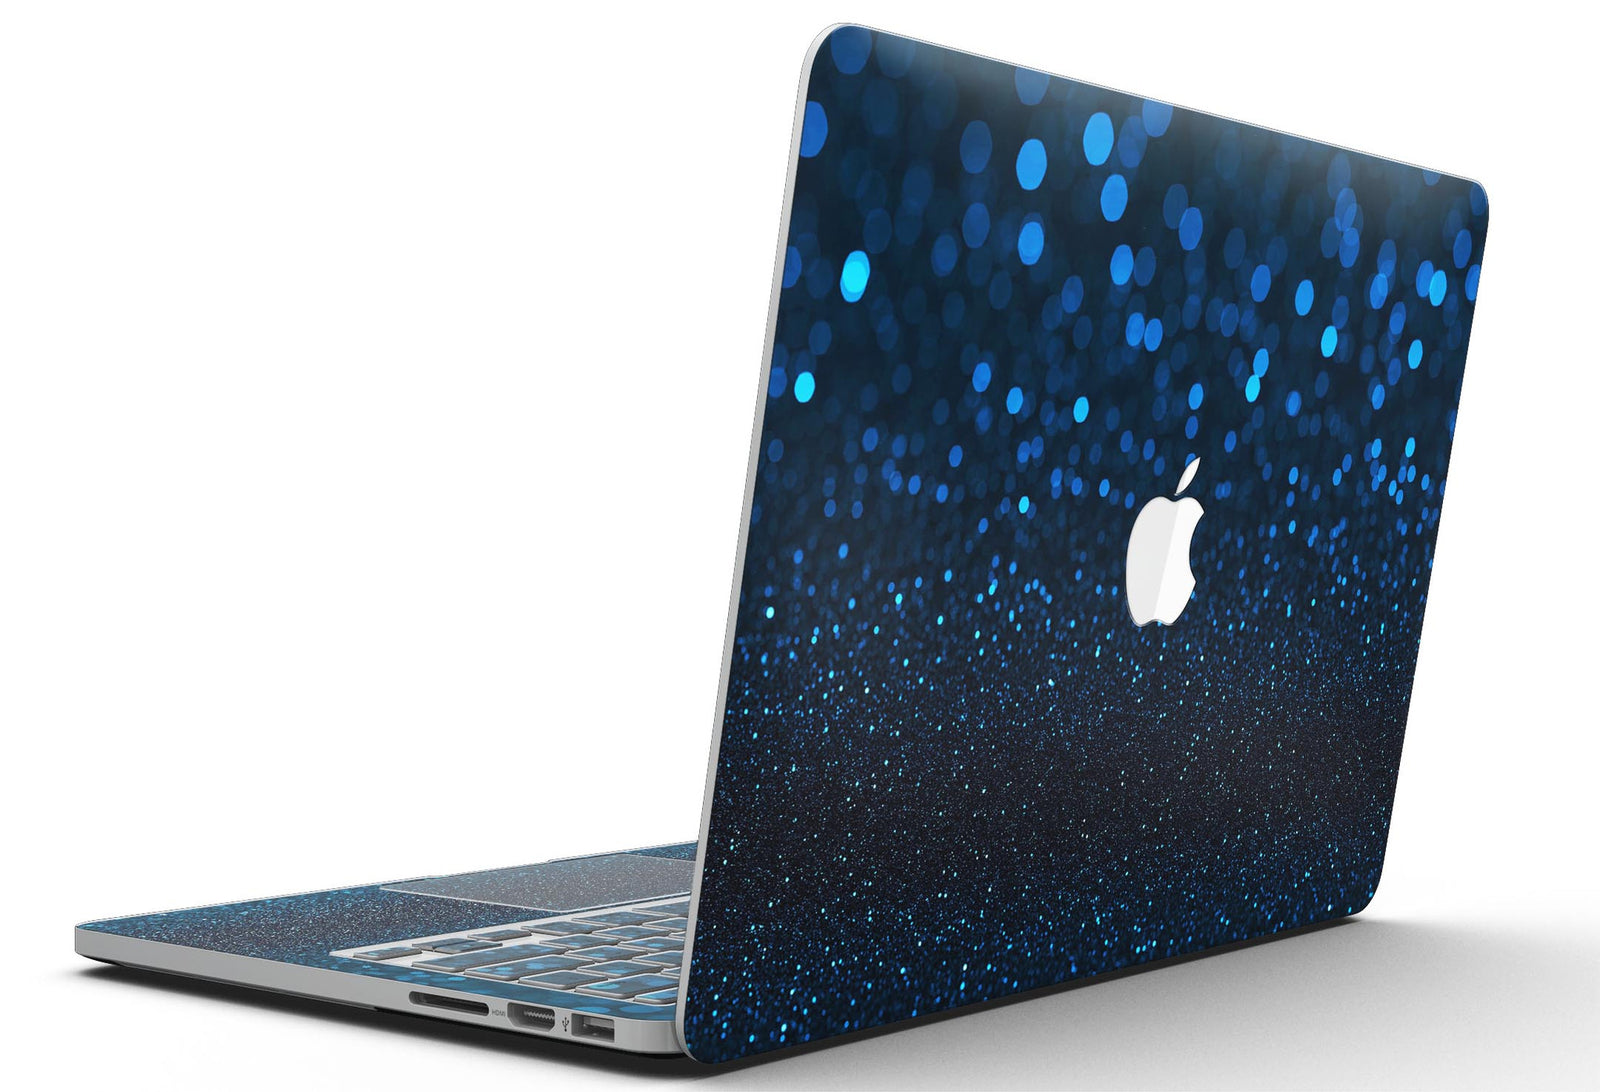 change macbook dark to light